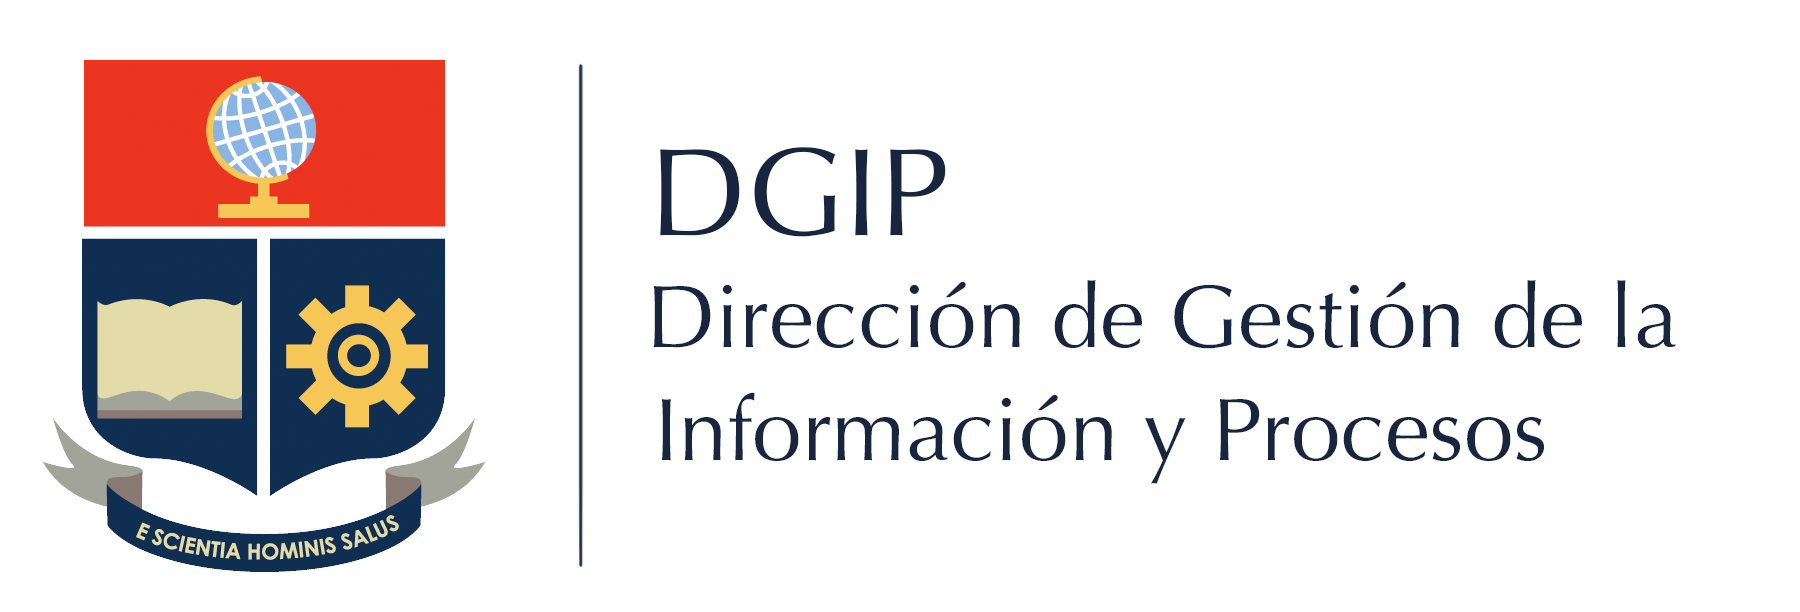 logo_DGIP_institucional.png